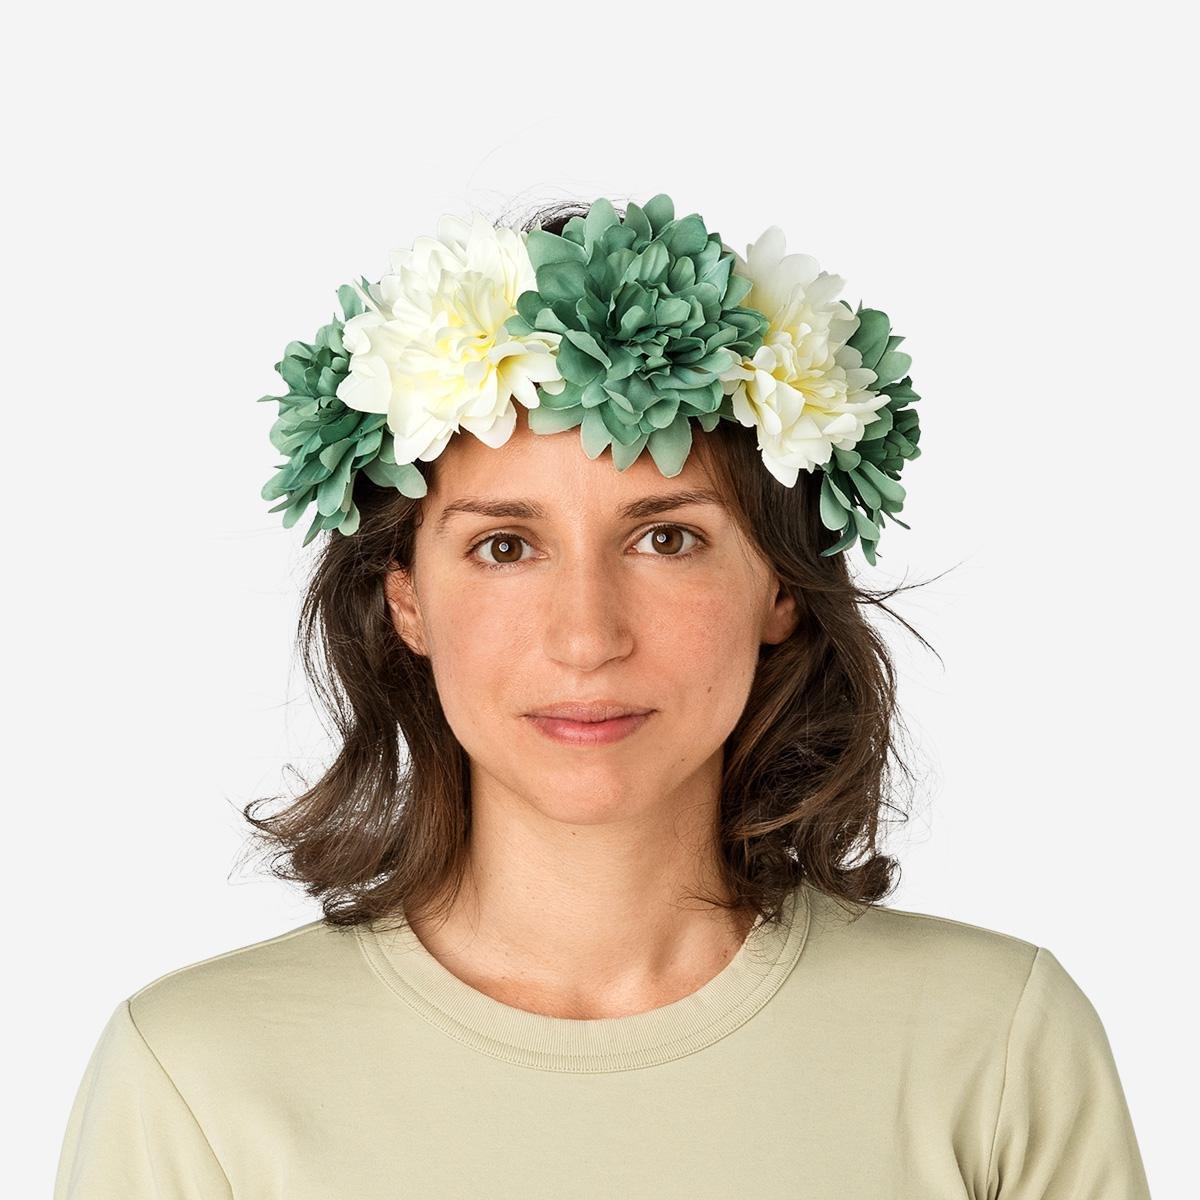 Green flower headband